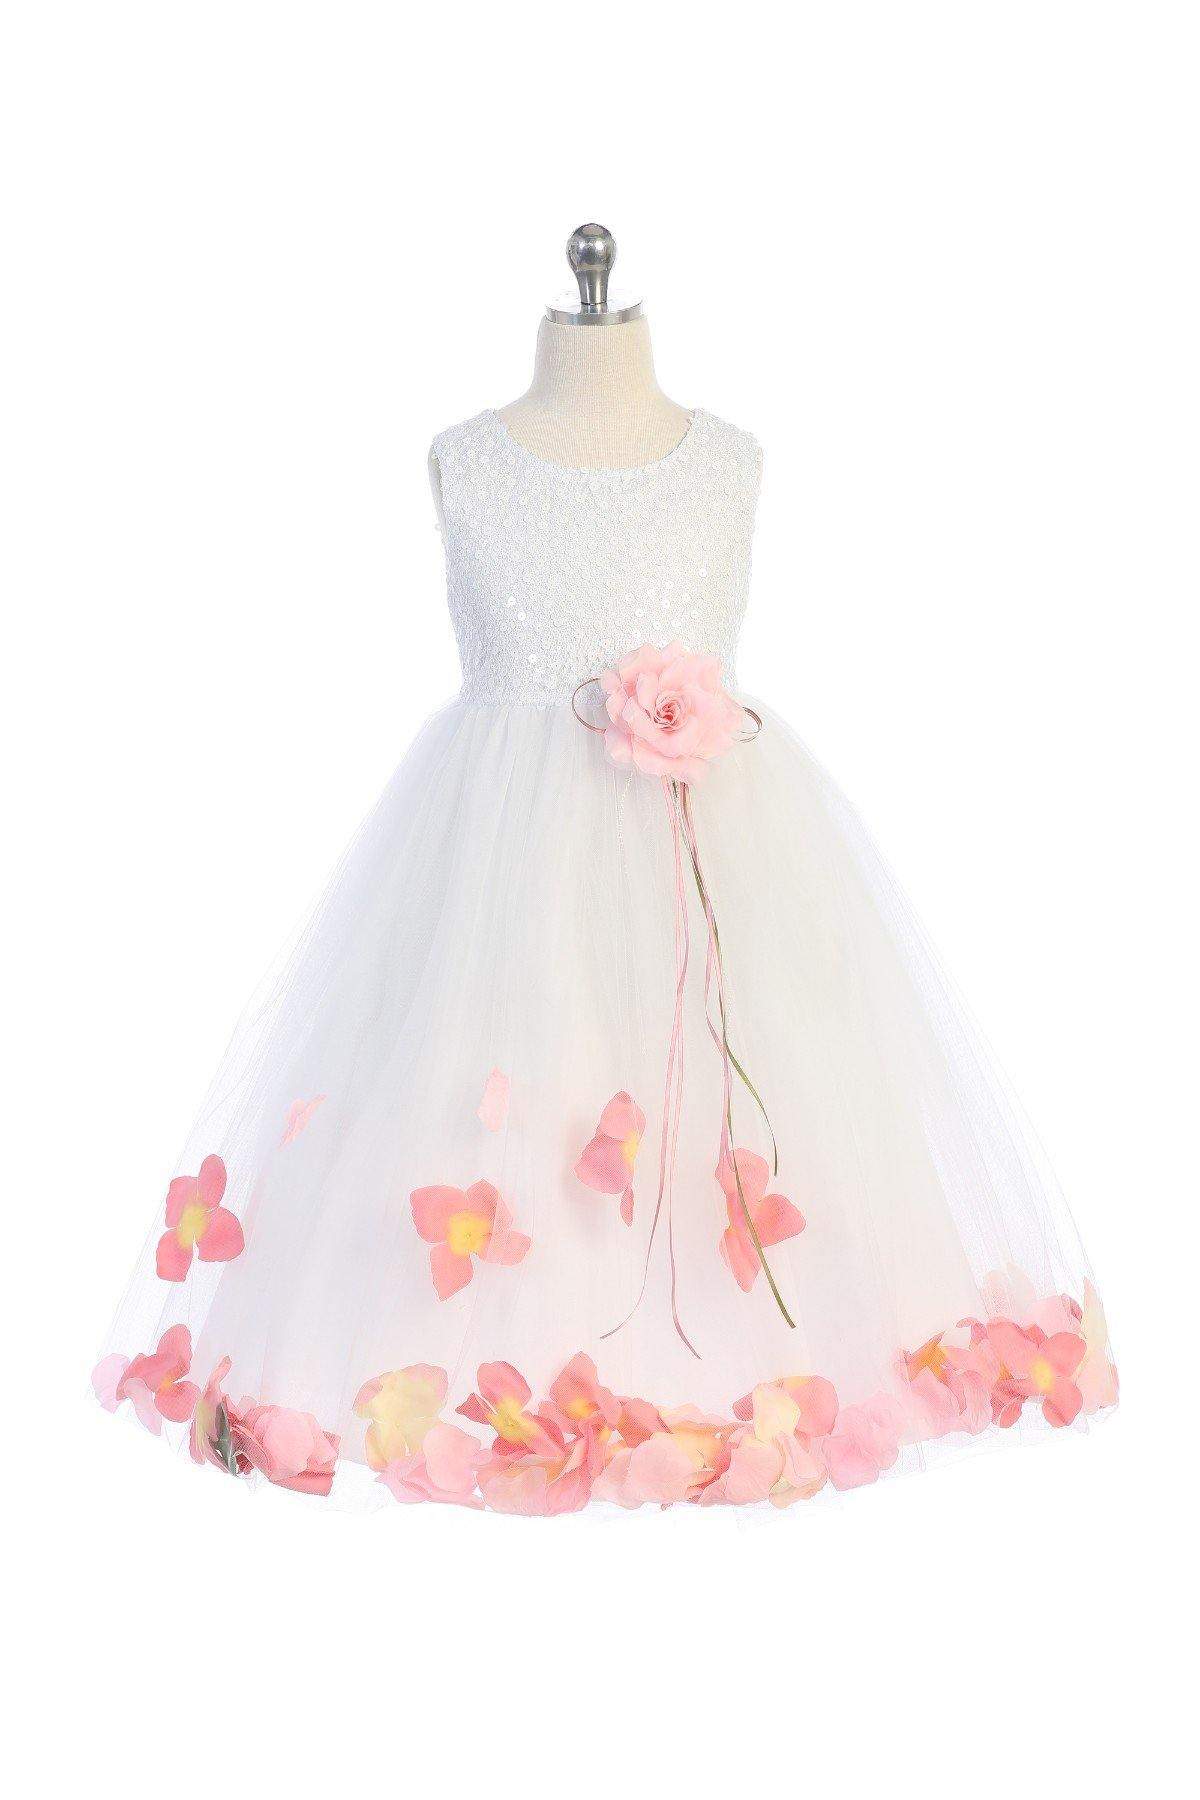 Sequin Top Petal Dress (2of2)-Kid's Dream-big_girl,fabric_Sequin,flower-girl-dresses,girl-dress,length_Tea Length,meta-related-collection-shop-the-outfit-girls,sequin,size_02,size_04,size_06,size_08,size_10,size_12,size_14